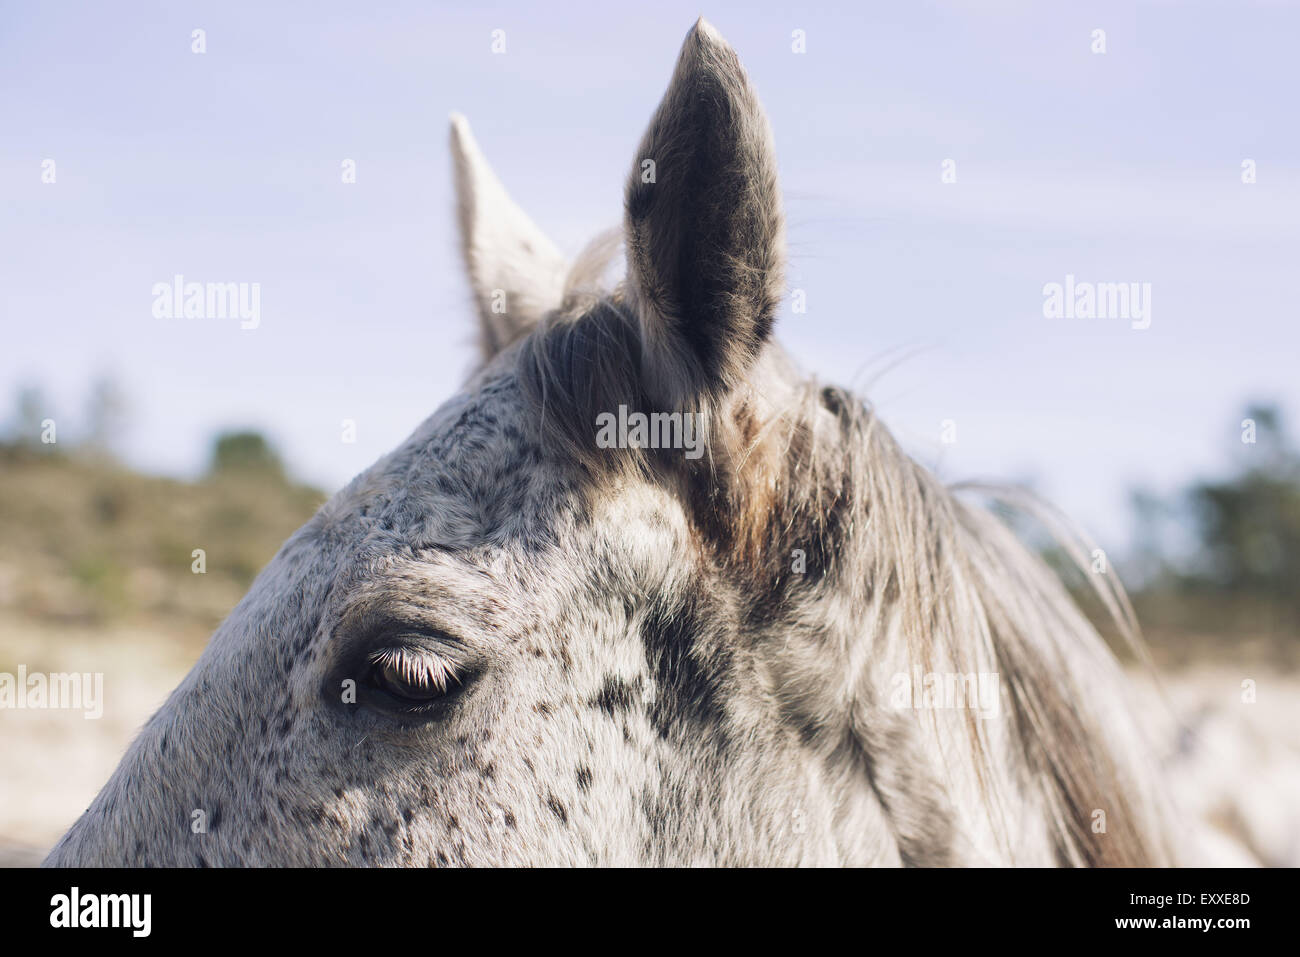 Horse, close-up Stock Photo